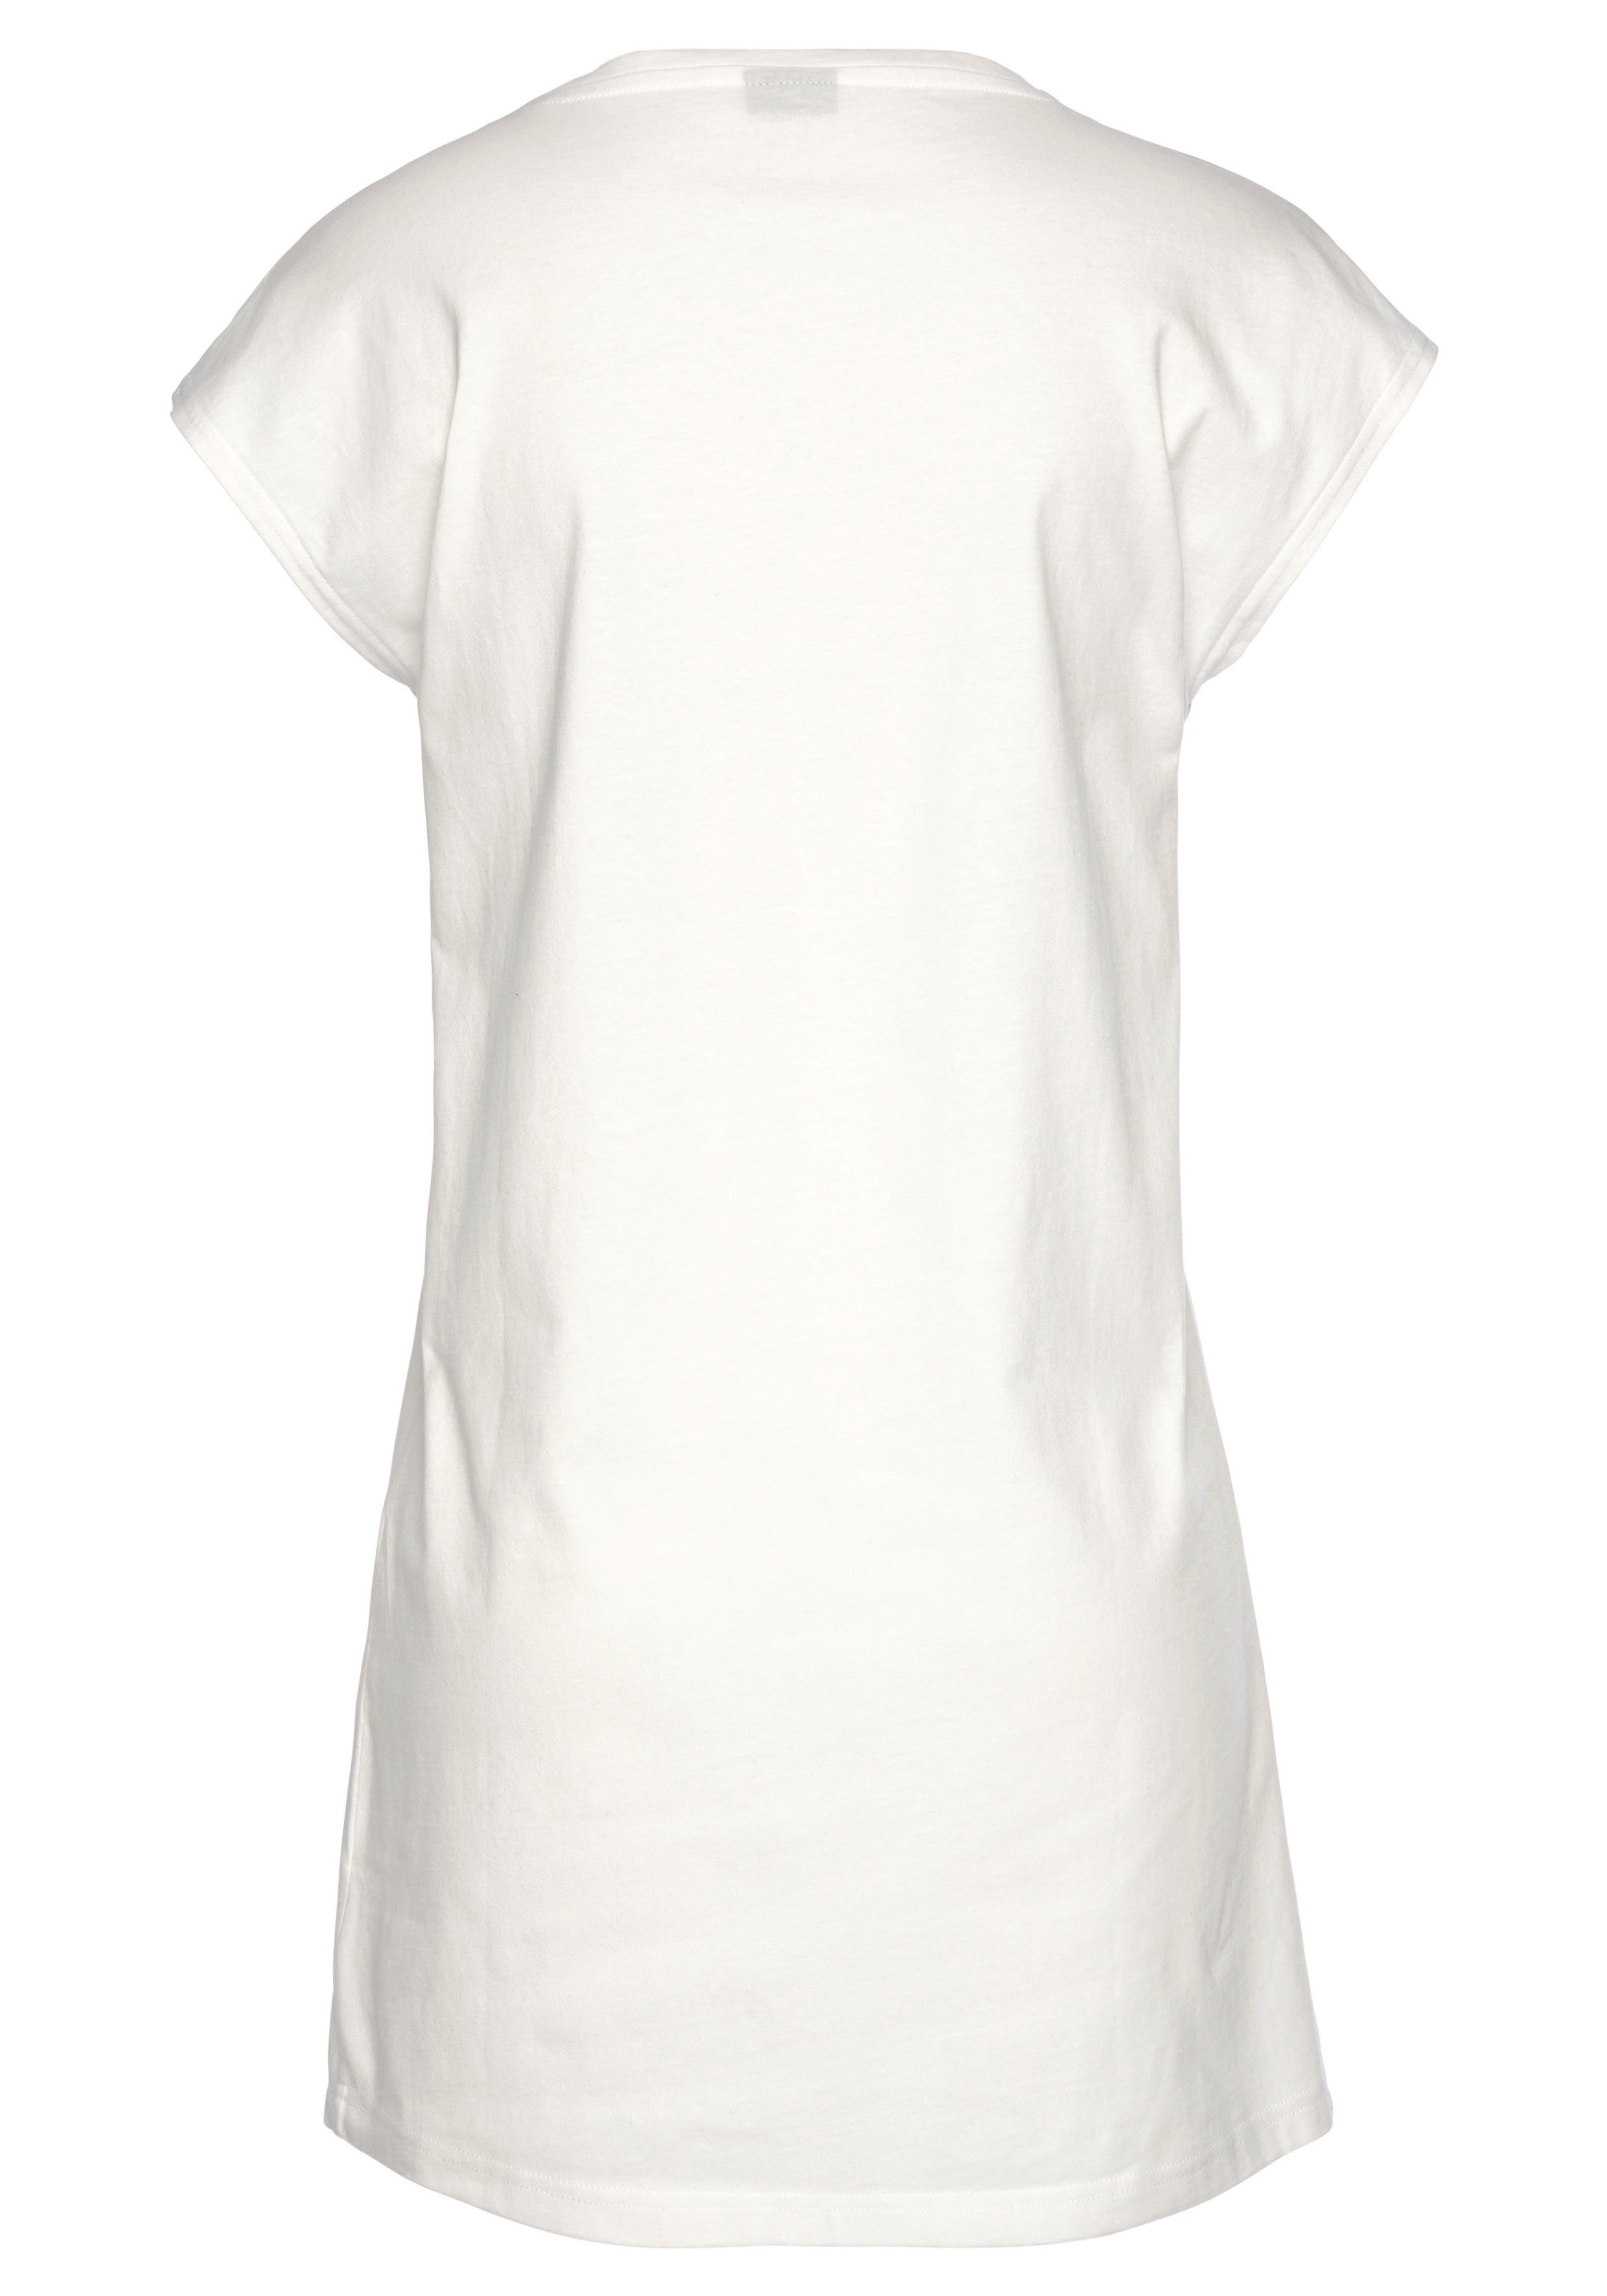 Buffalo Nachthemd Leomotiv mit weiß-schwarz